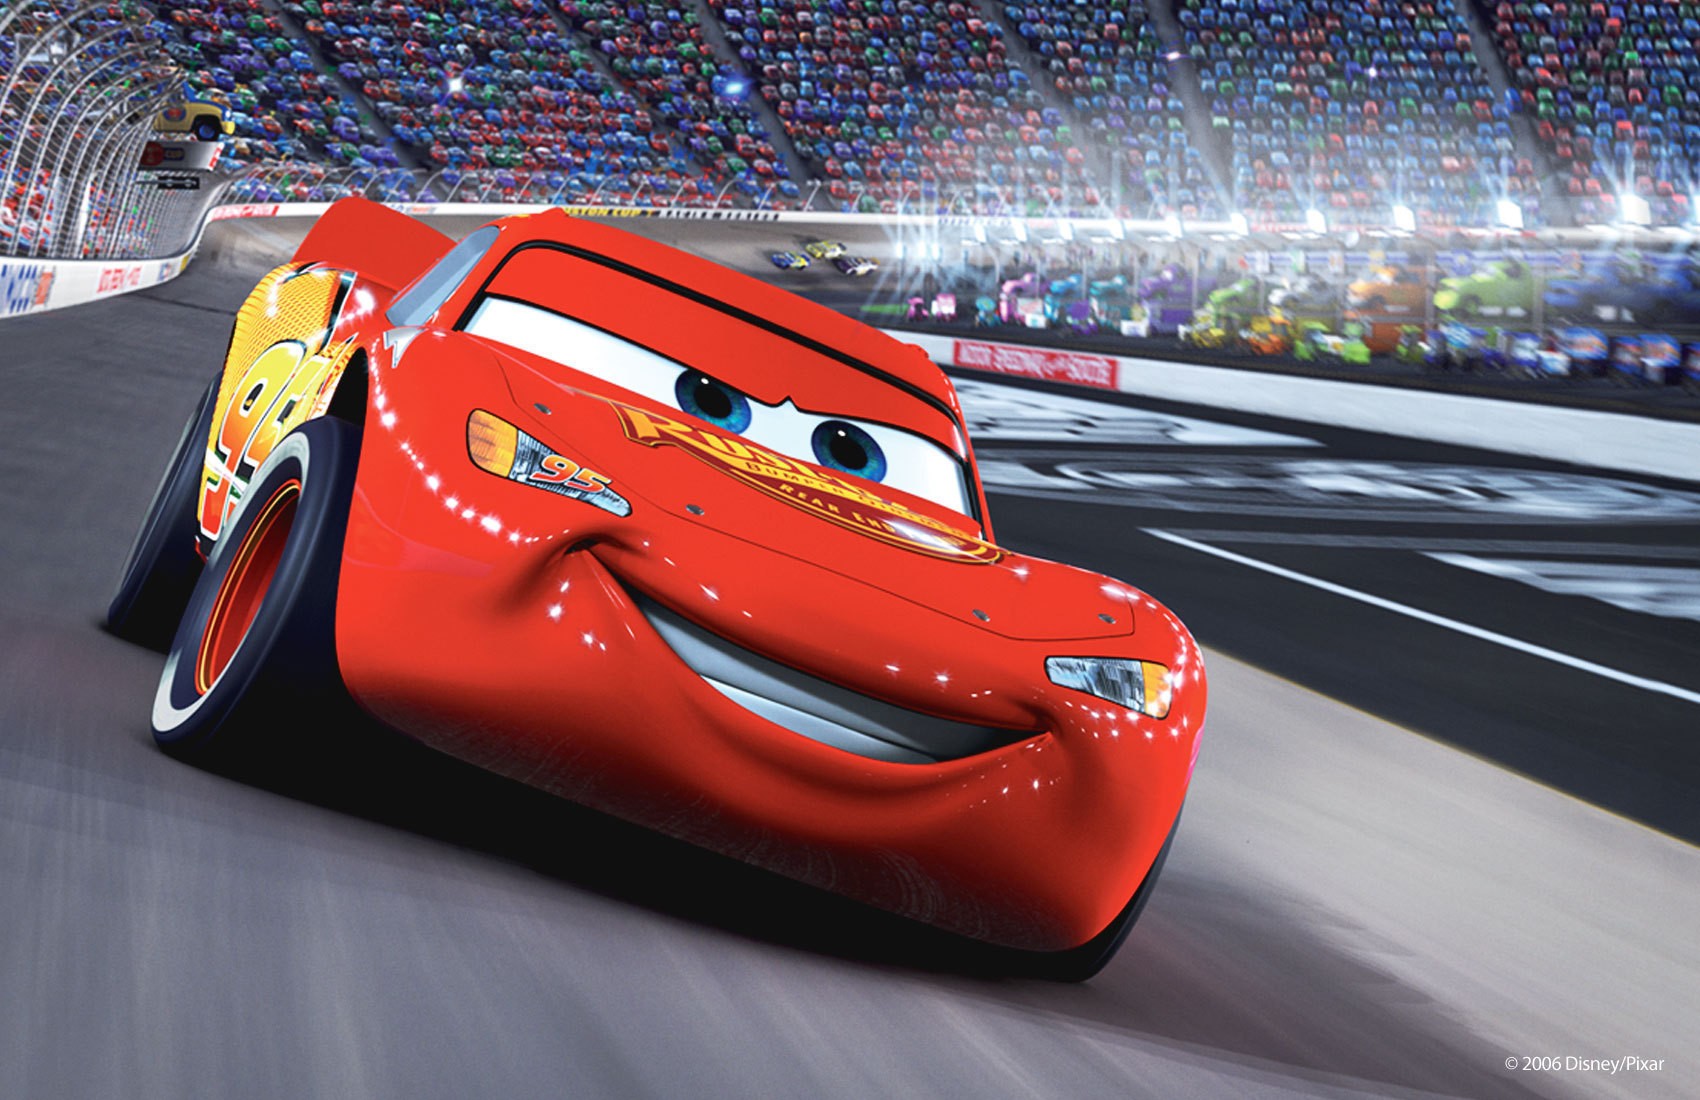 PHOTOS - Lightning McQueen's Racing Academy now open at Disney's Hollywood  Studios